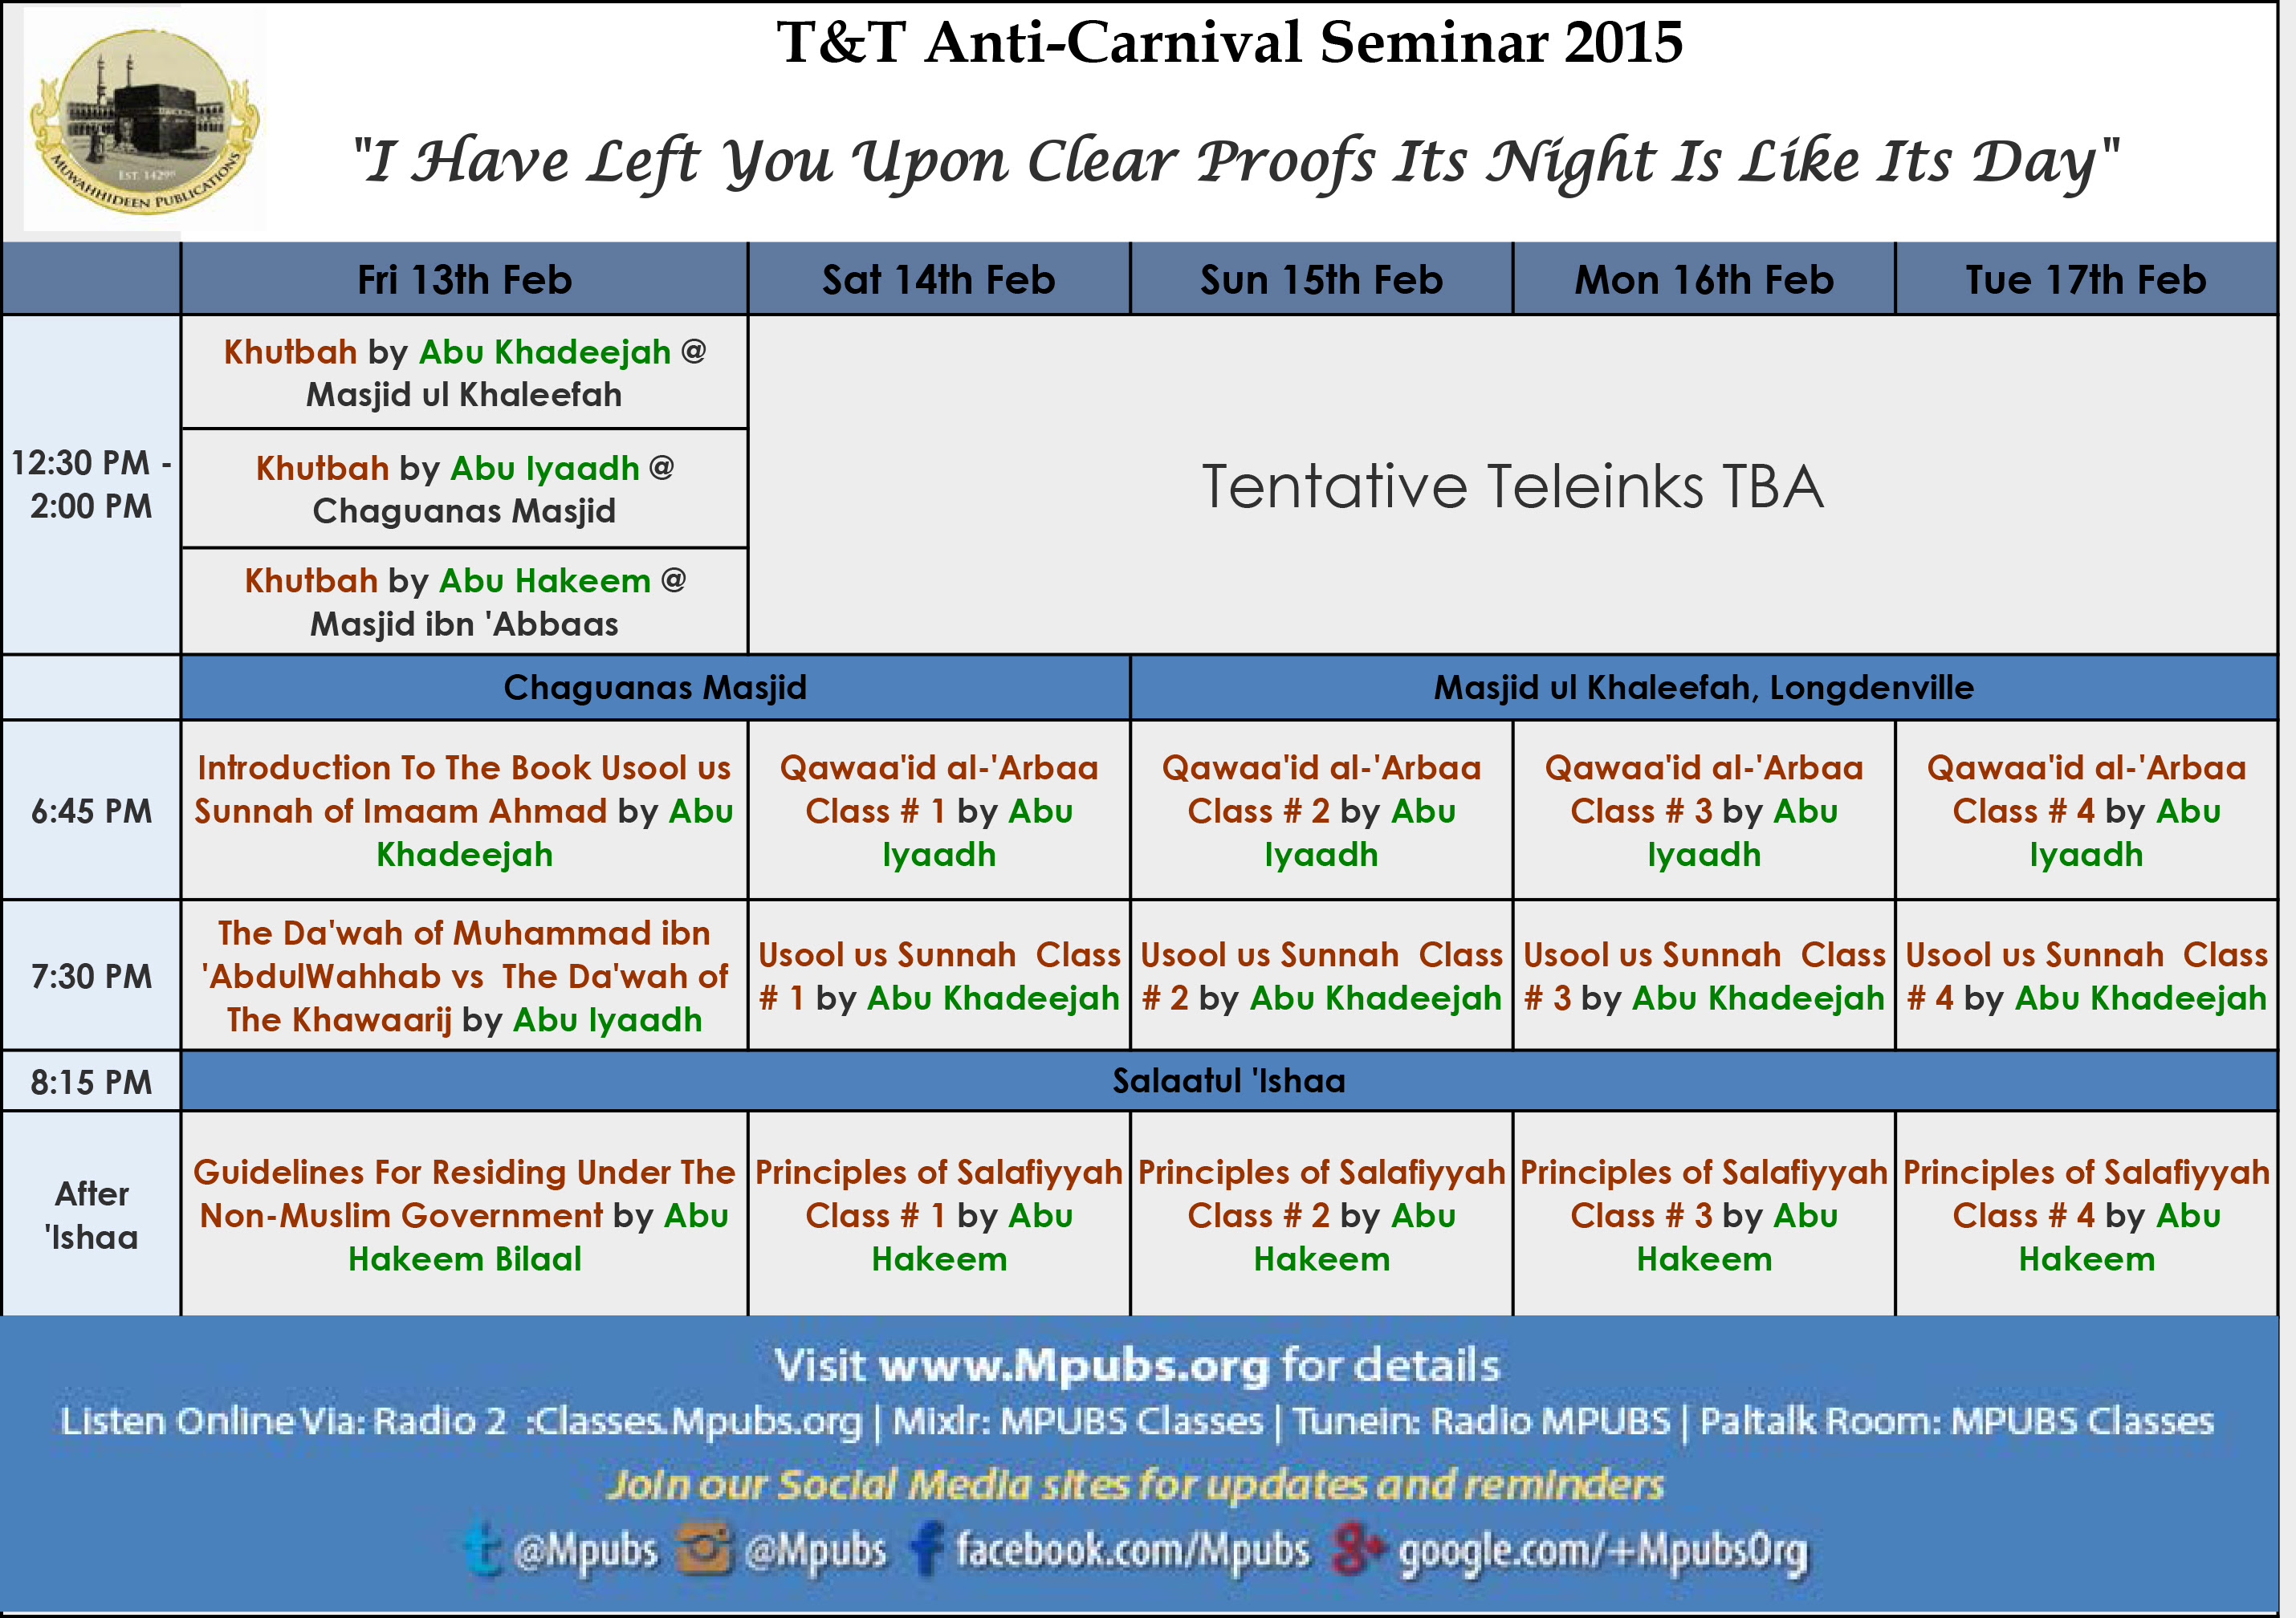 AntiCarnival 2015 schedule